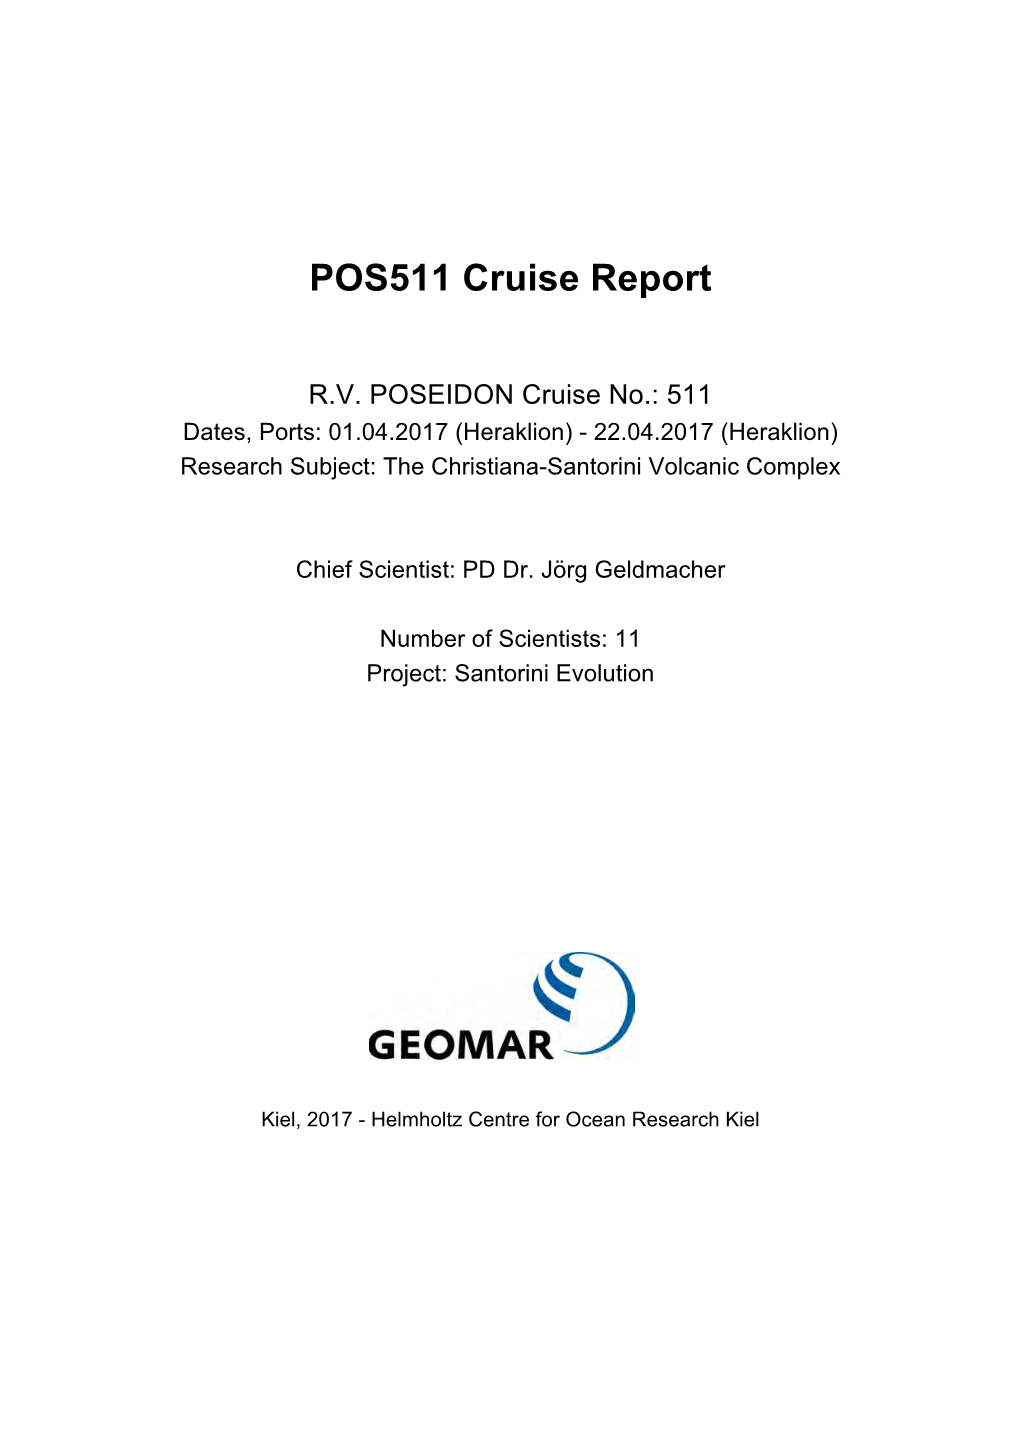 POS 511 Cruise Report